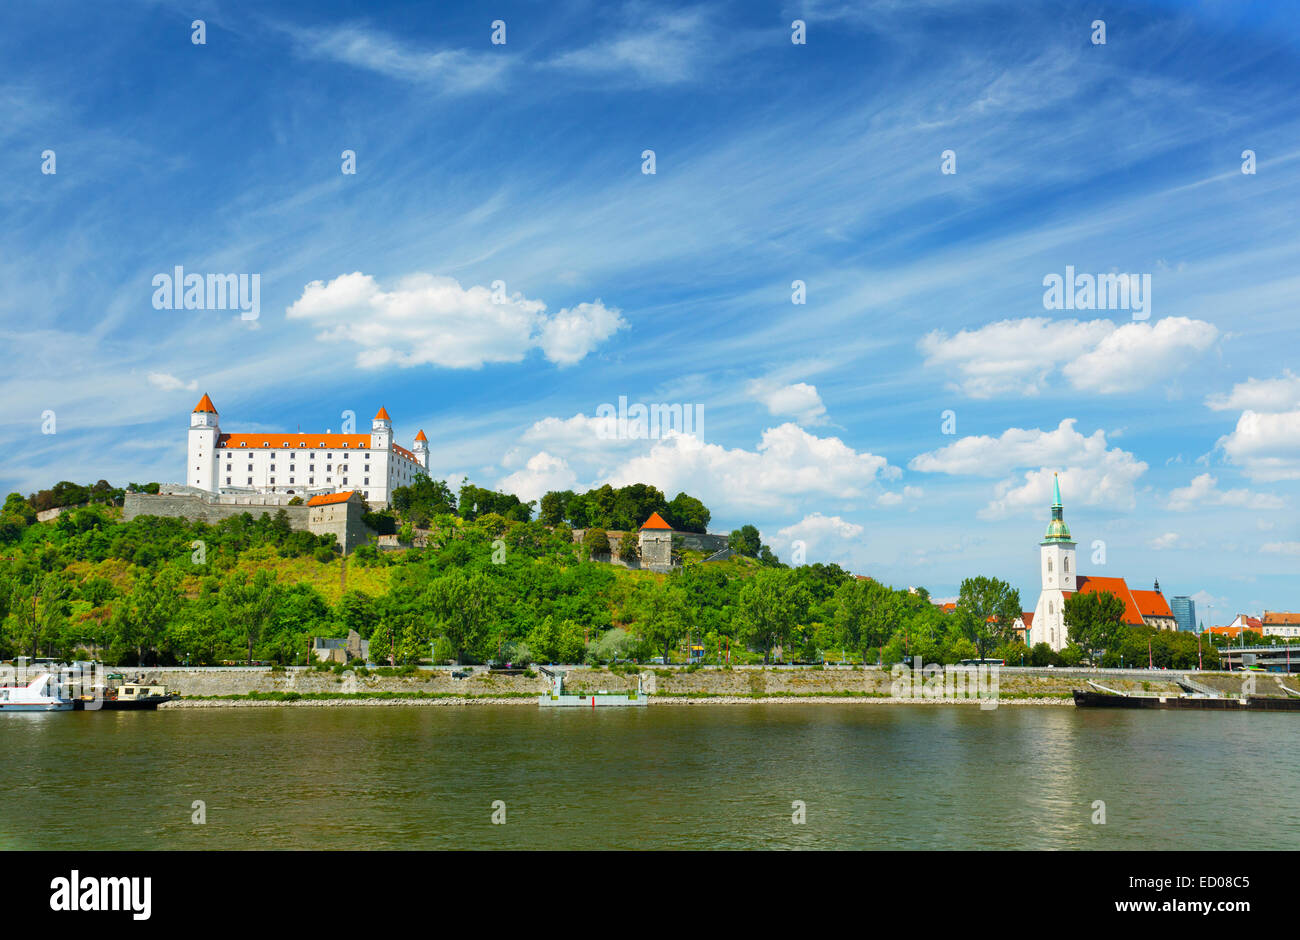 Medieval castle on the hill against the sky, Bratislava, Slovakia Stock Photo